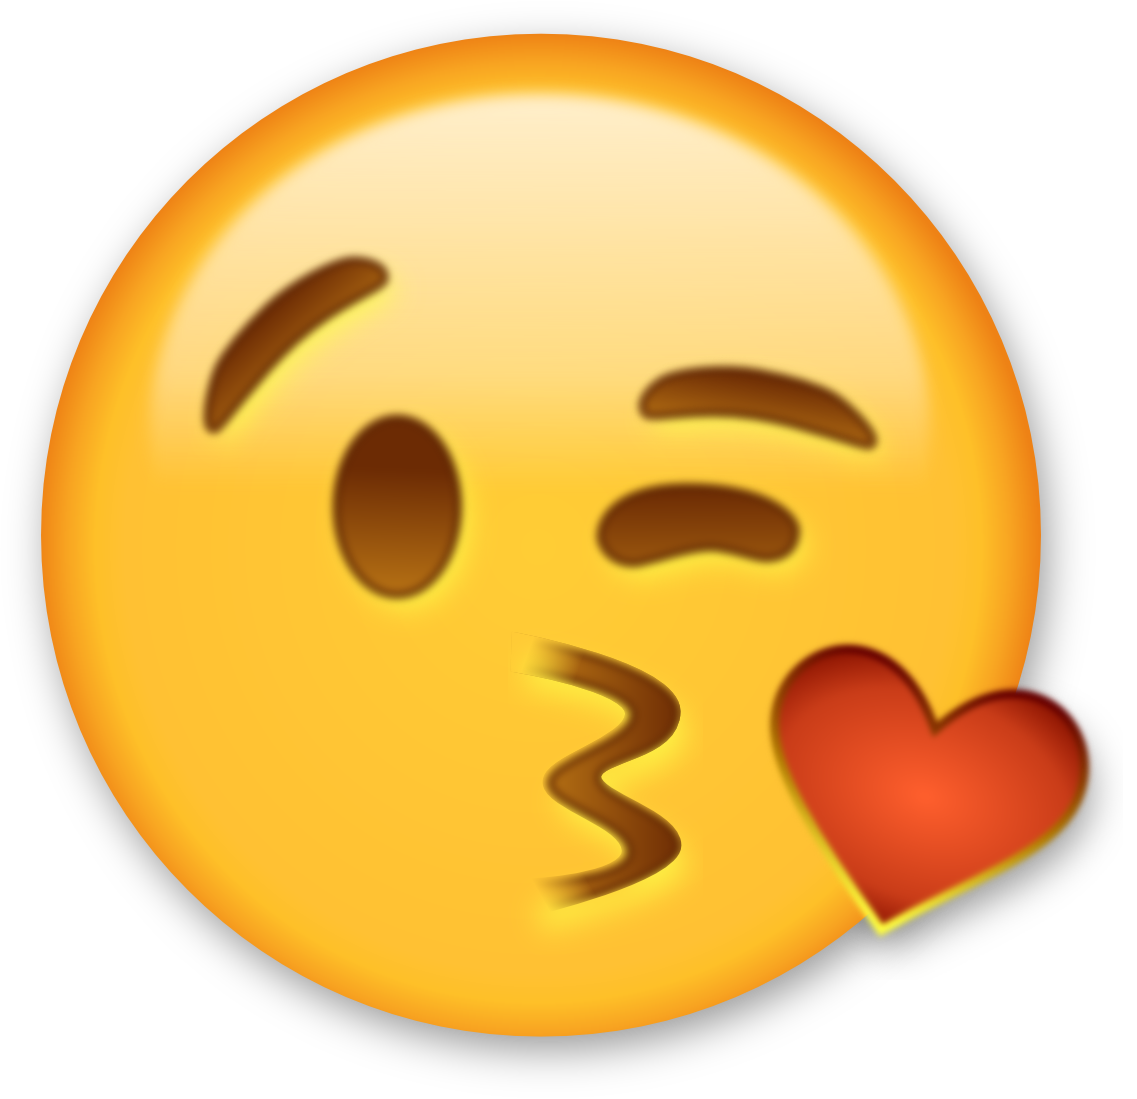 [49 ] Kissy Face Emoji Wallpaper On Wallpapersafari